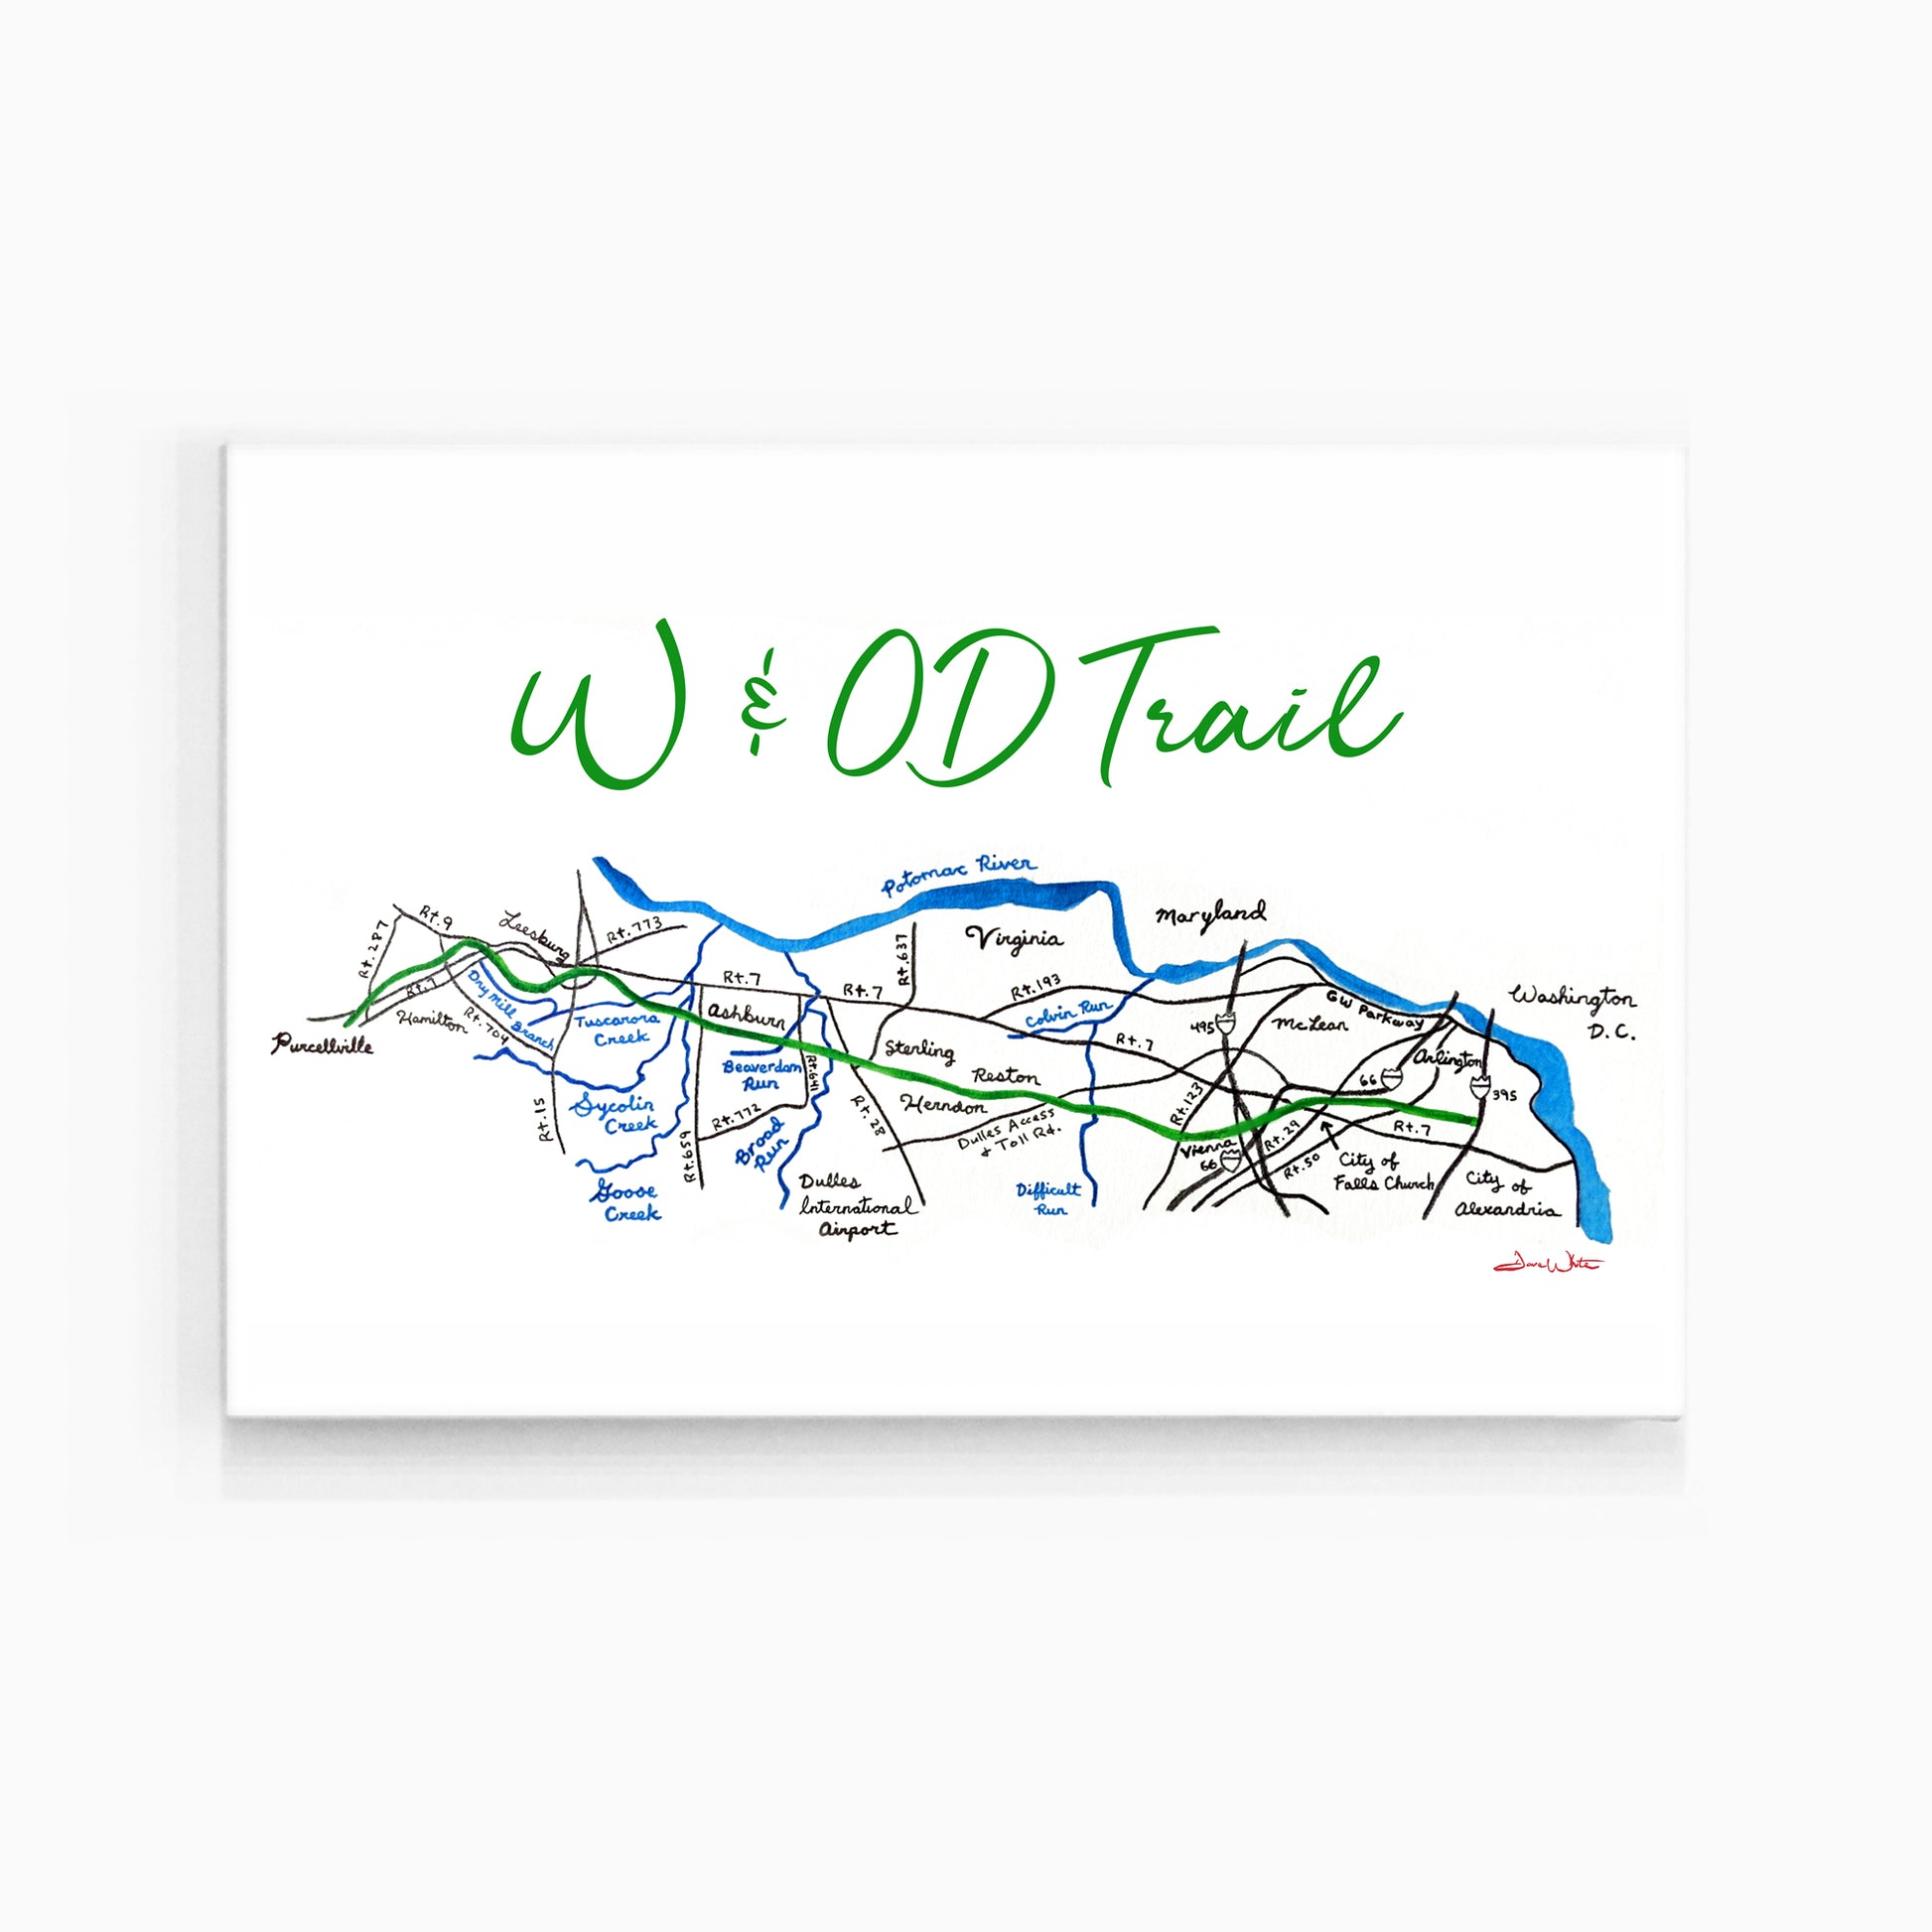 W&OD Trail Map Canvas Art Print by Artist Dave White